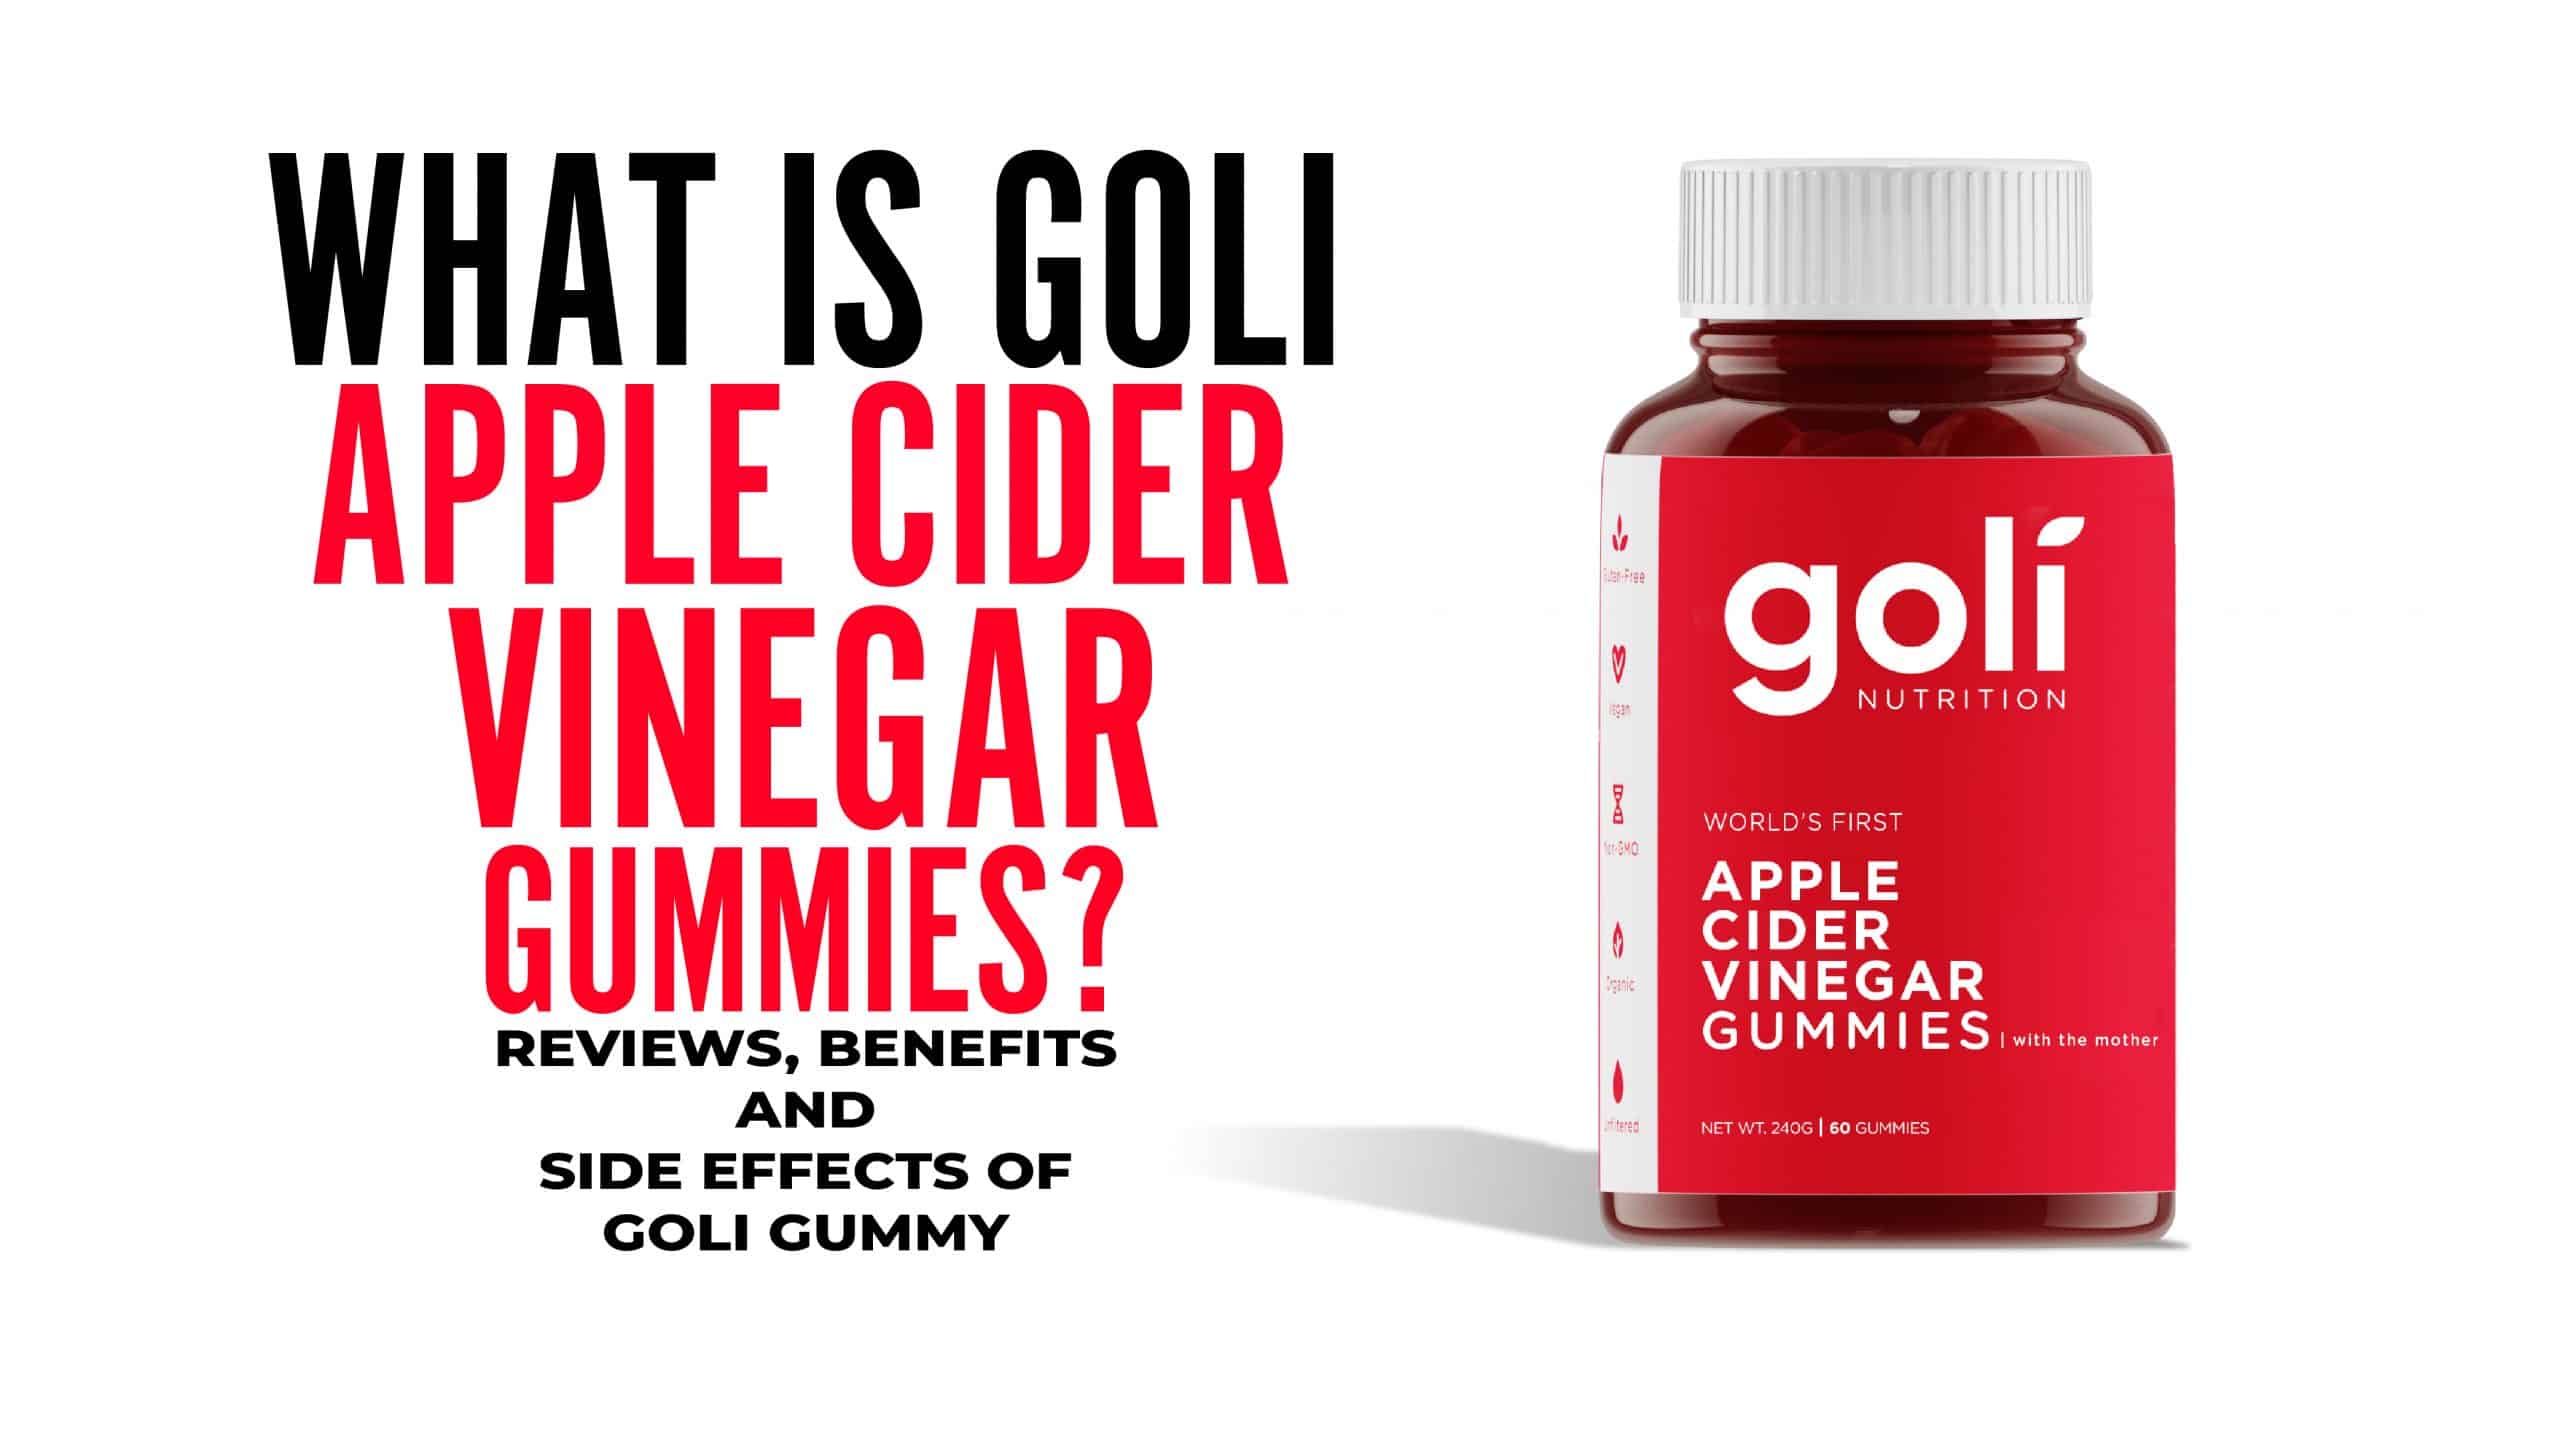 What is goli apple cider vinegar gummies?